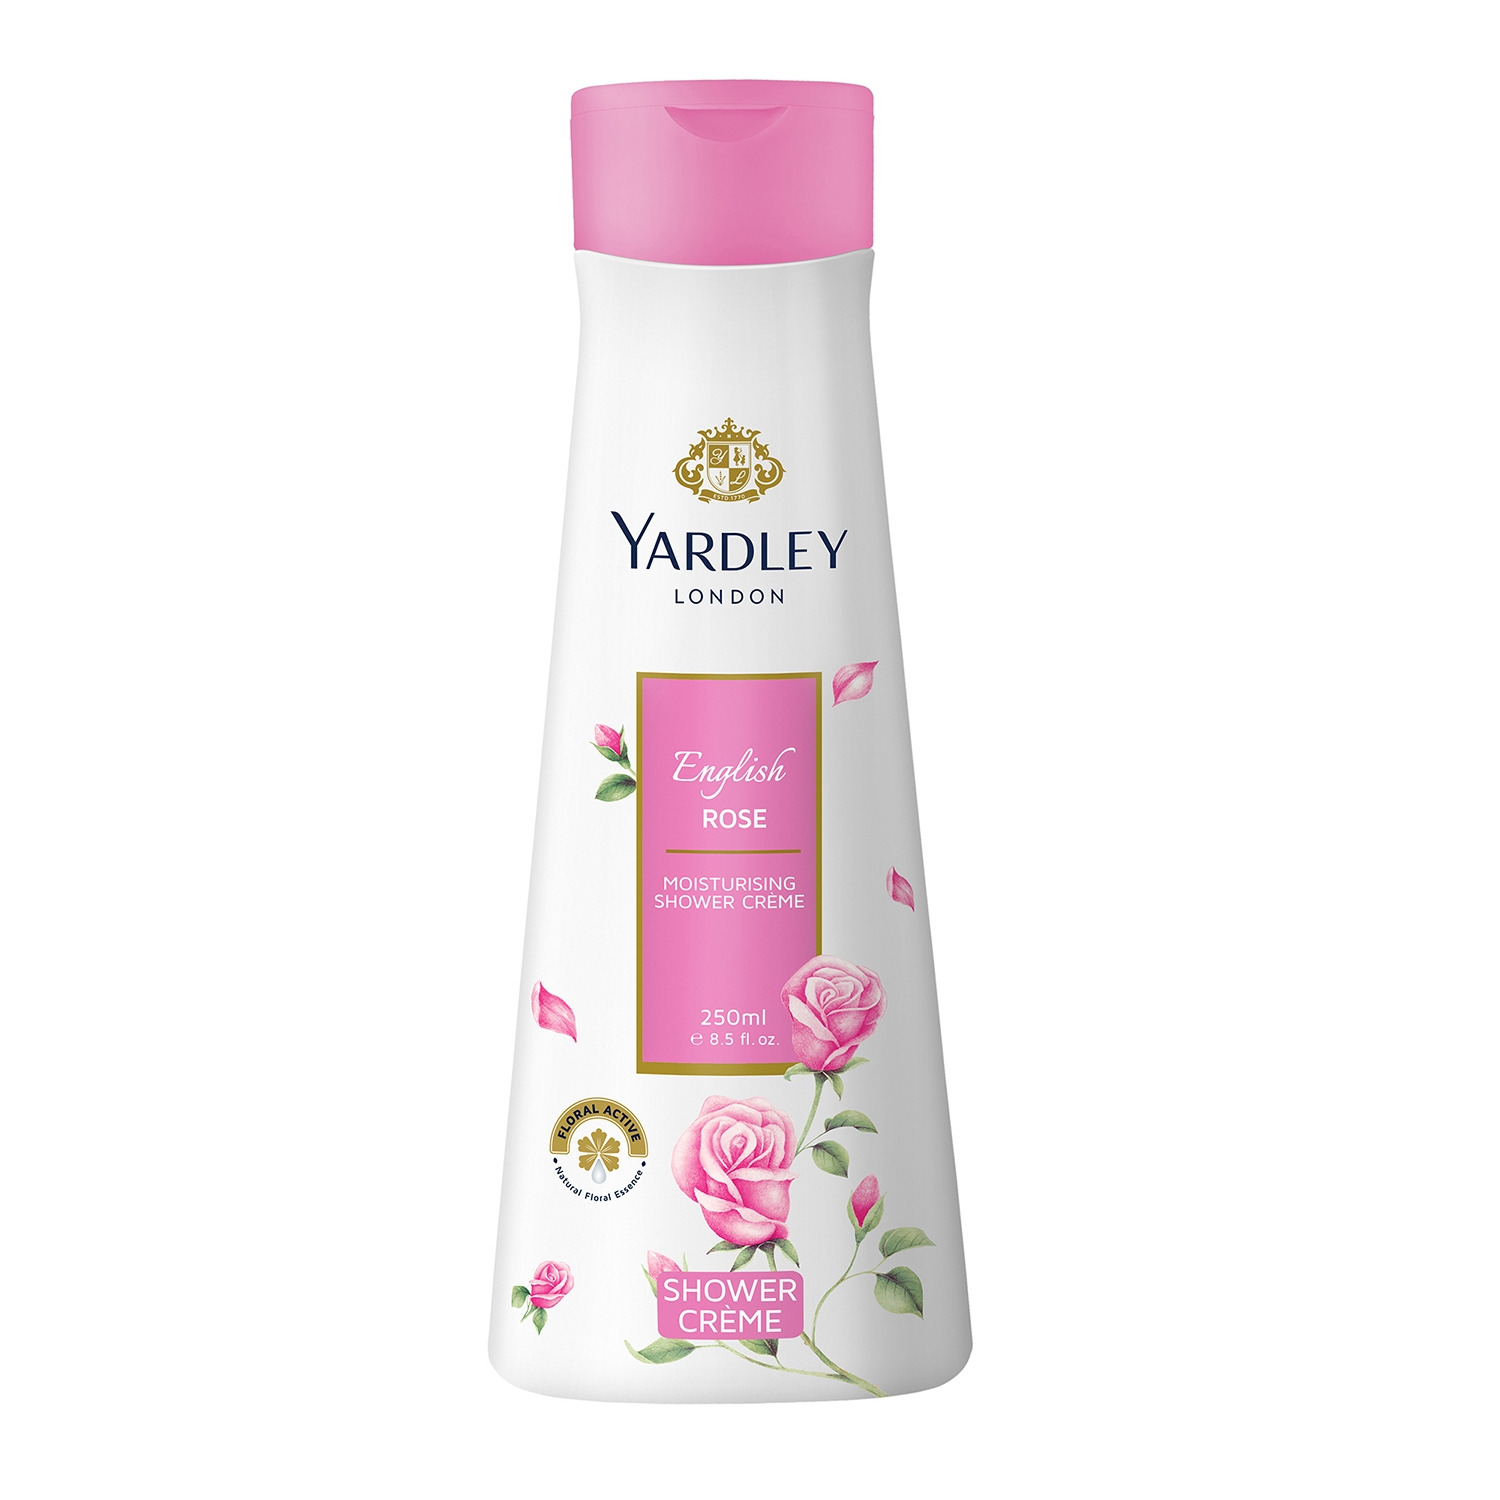 Yardley London English Rose Moisturising Shower Creme (250ml)